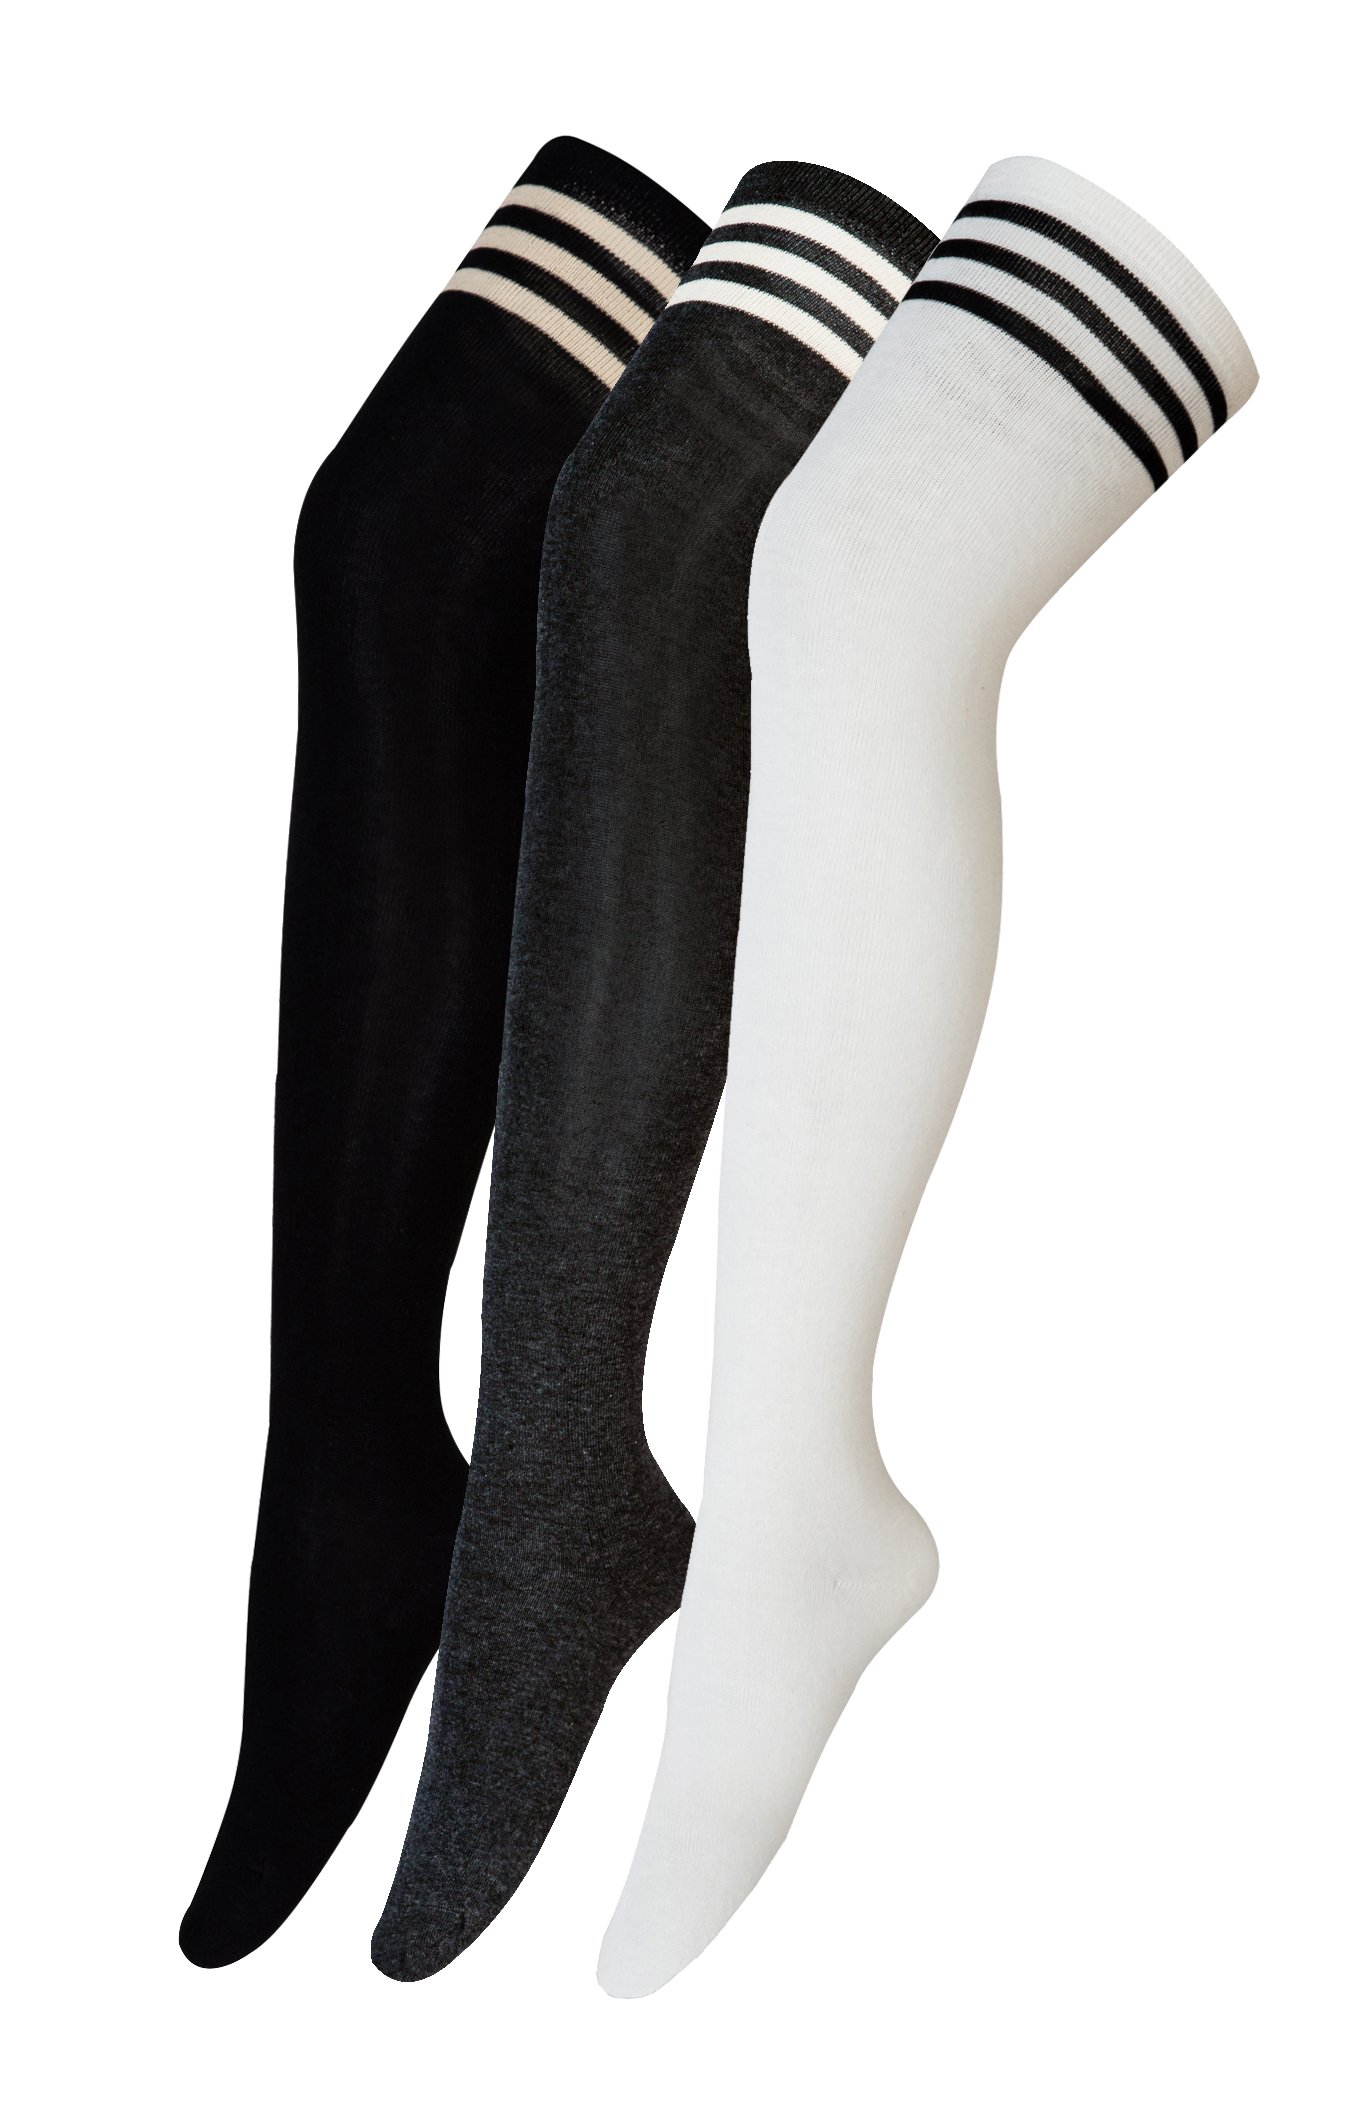 Urban Goco Women Triple Stripe Over The Knee High Socks 3 Pairs (Model A) RRP £4.99 CLEARANCE XL £3.99